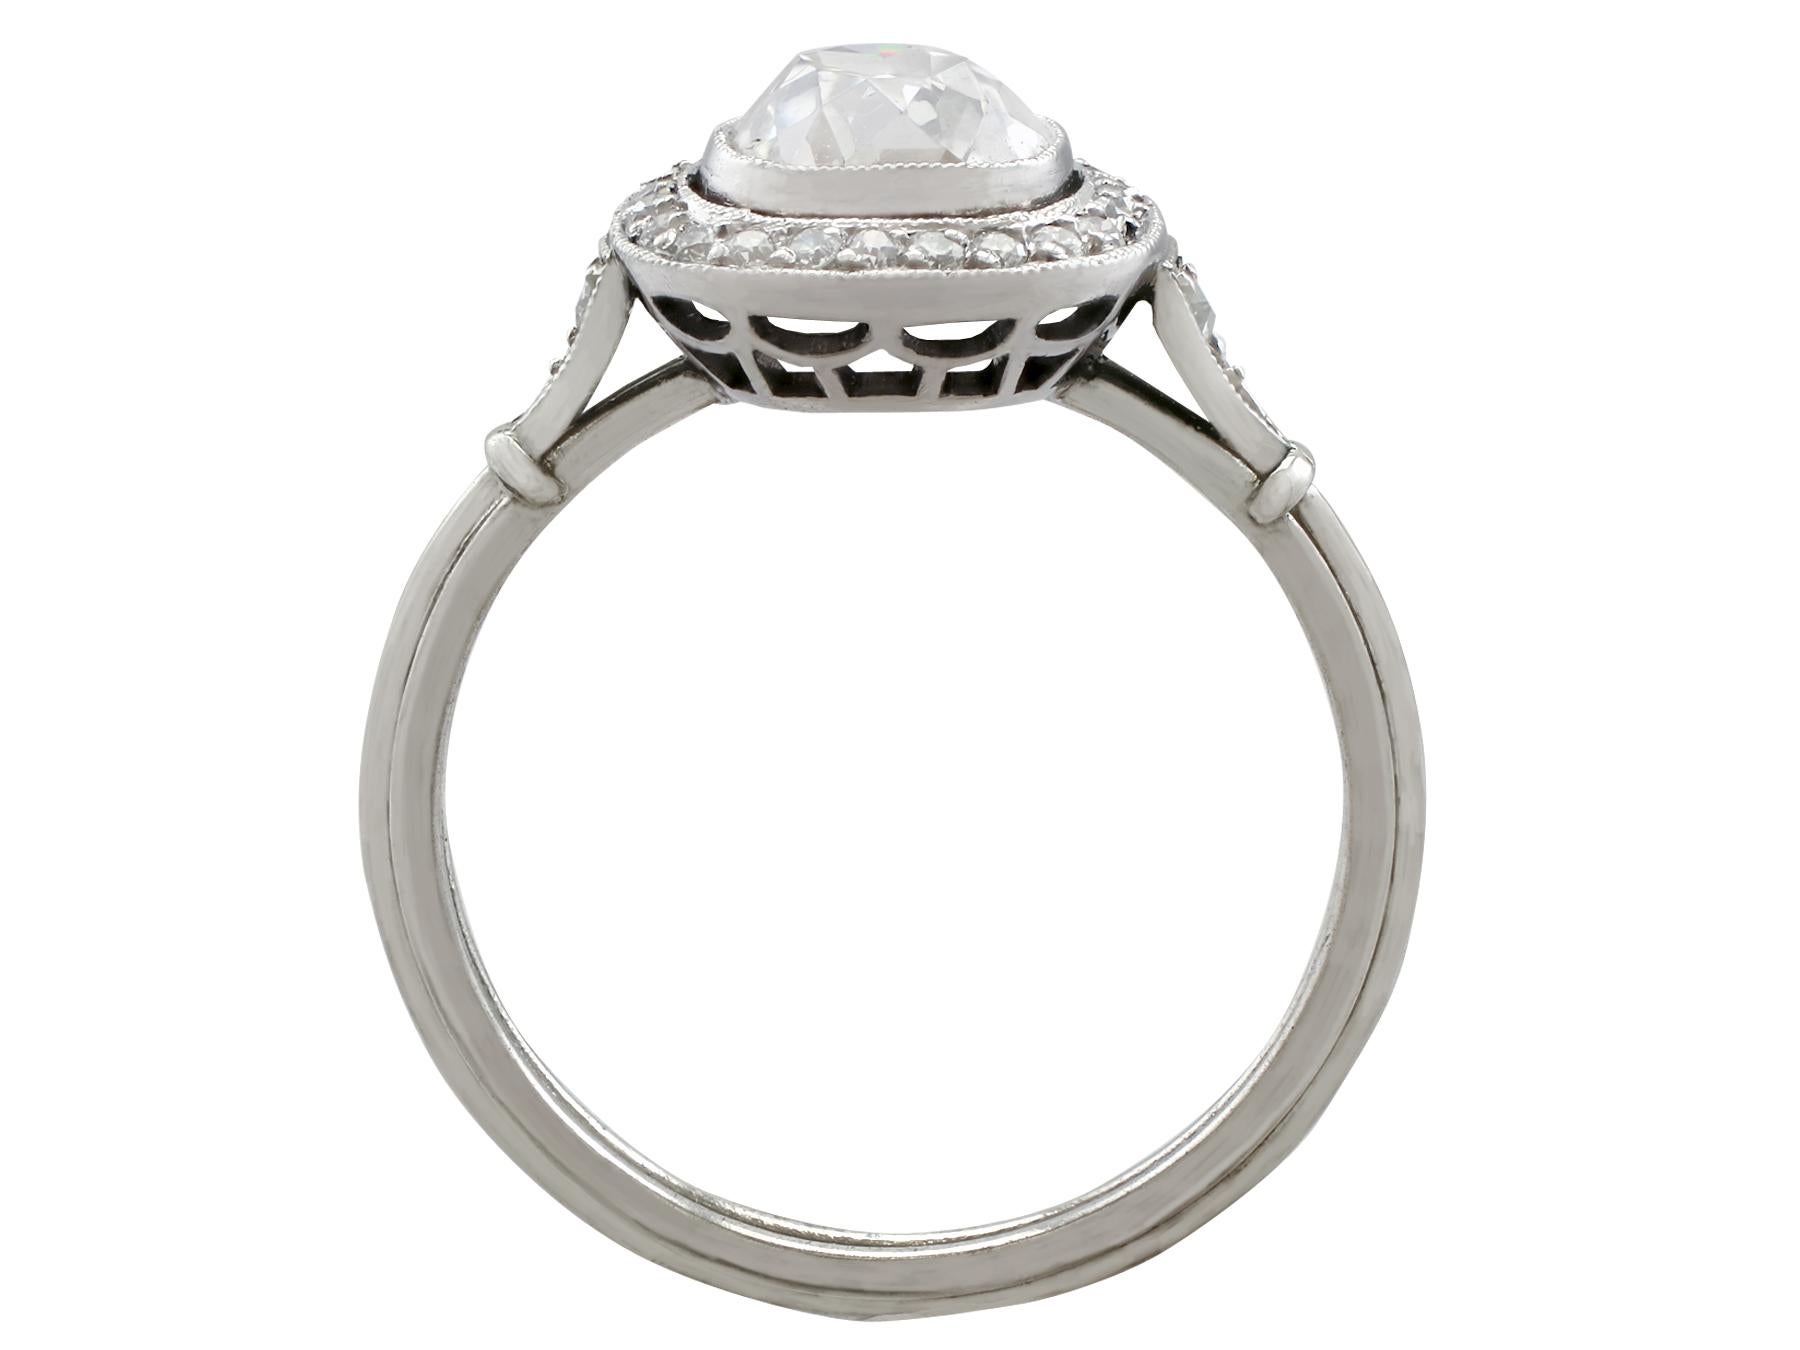 Antique and Contemporary 1.48 Carat Diamond and Platinum Halo Ring 1